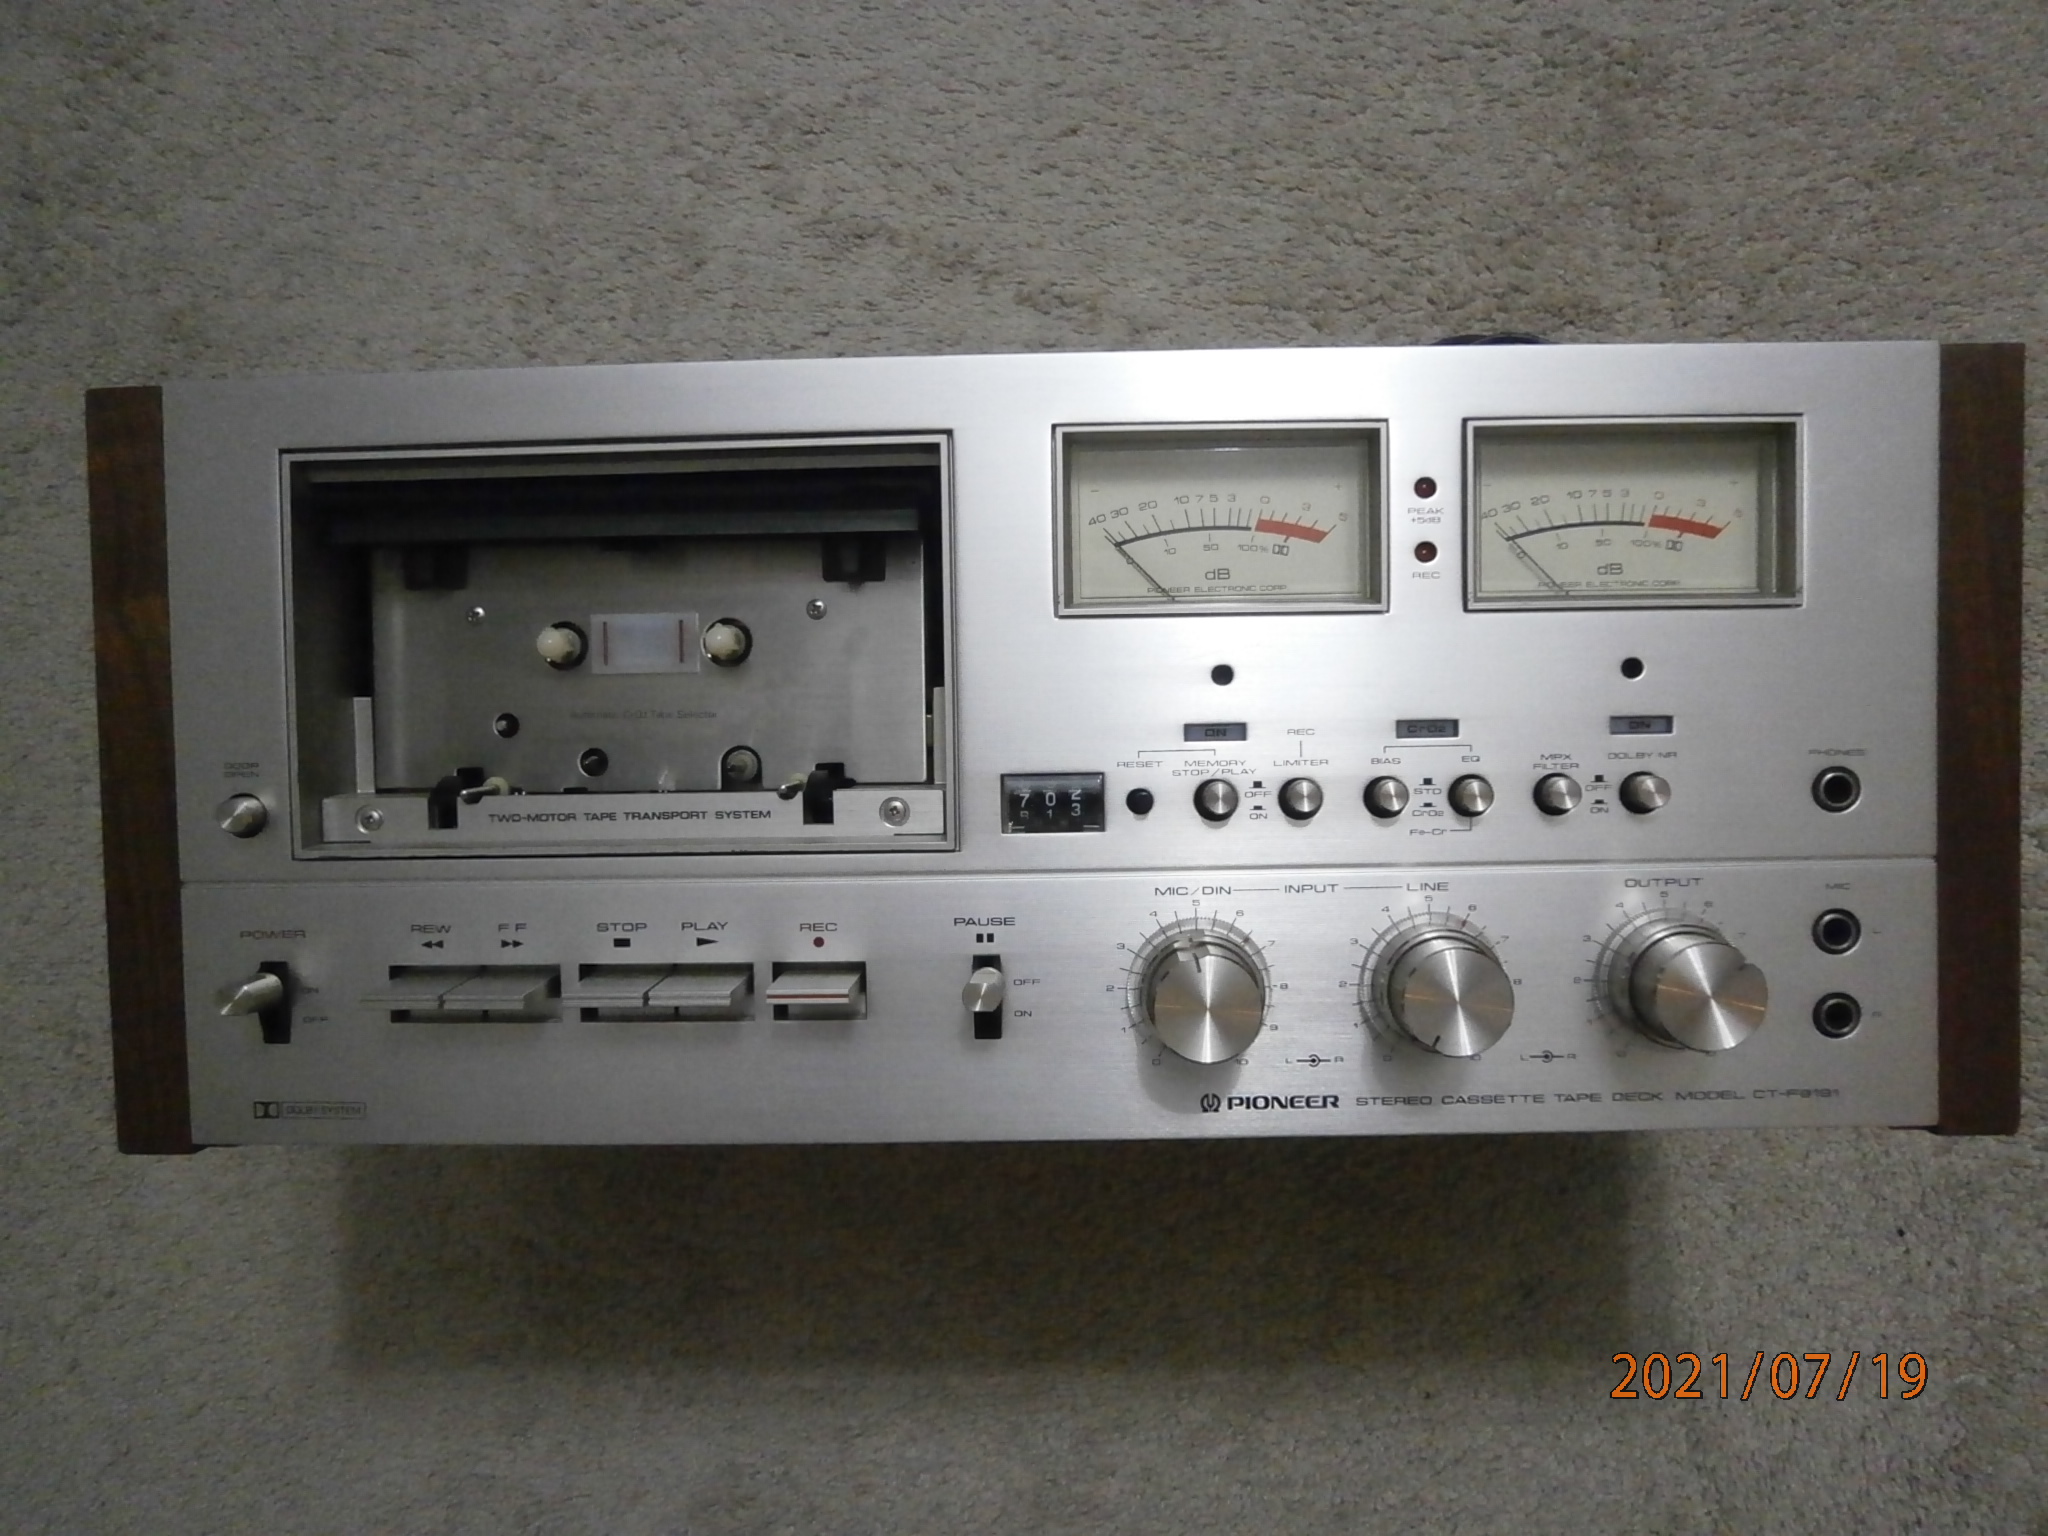 CT-F9191 cassette deck